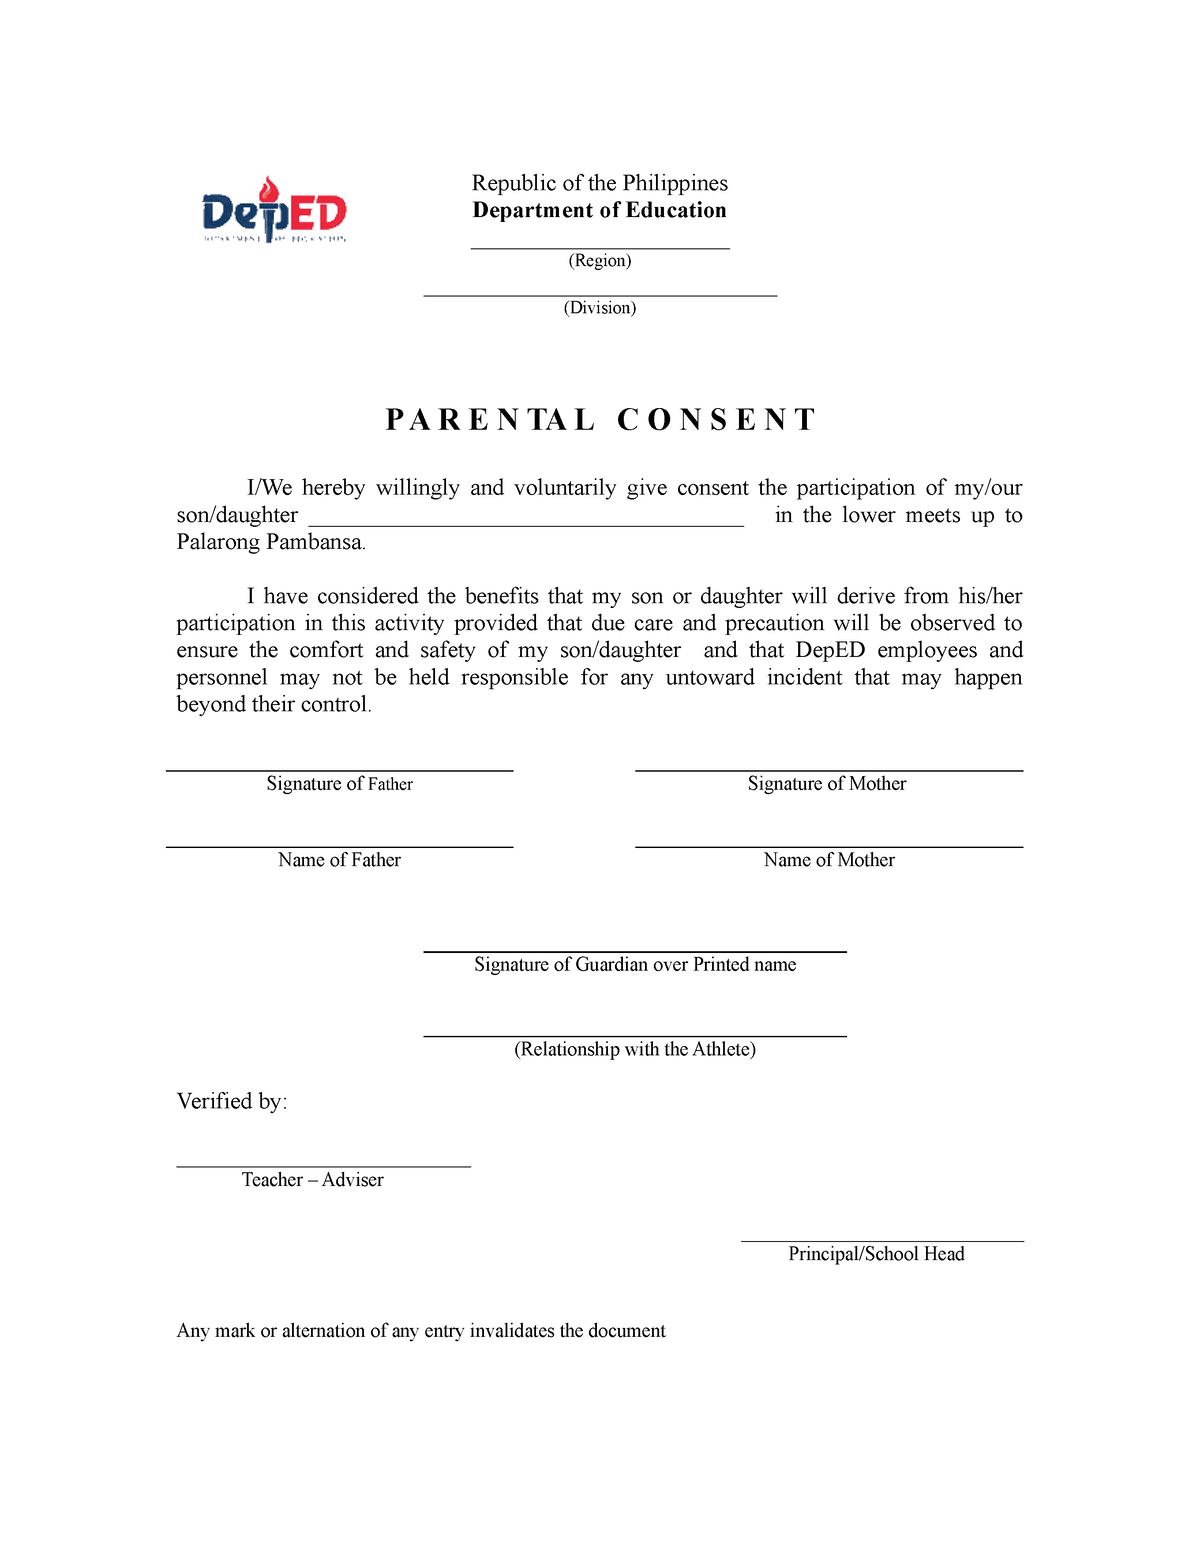 Parental Consent Educational Republic Of The Philippines Department